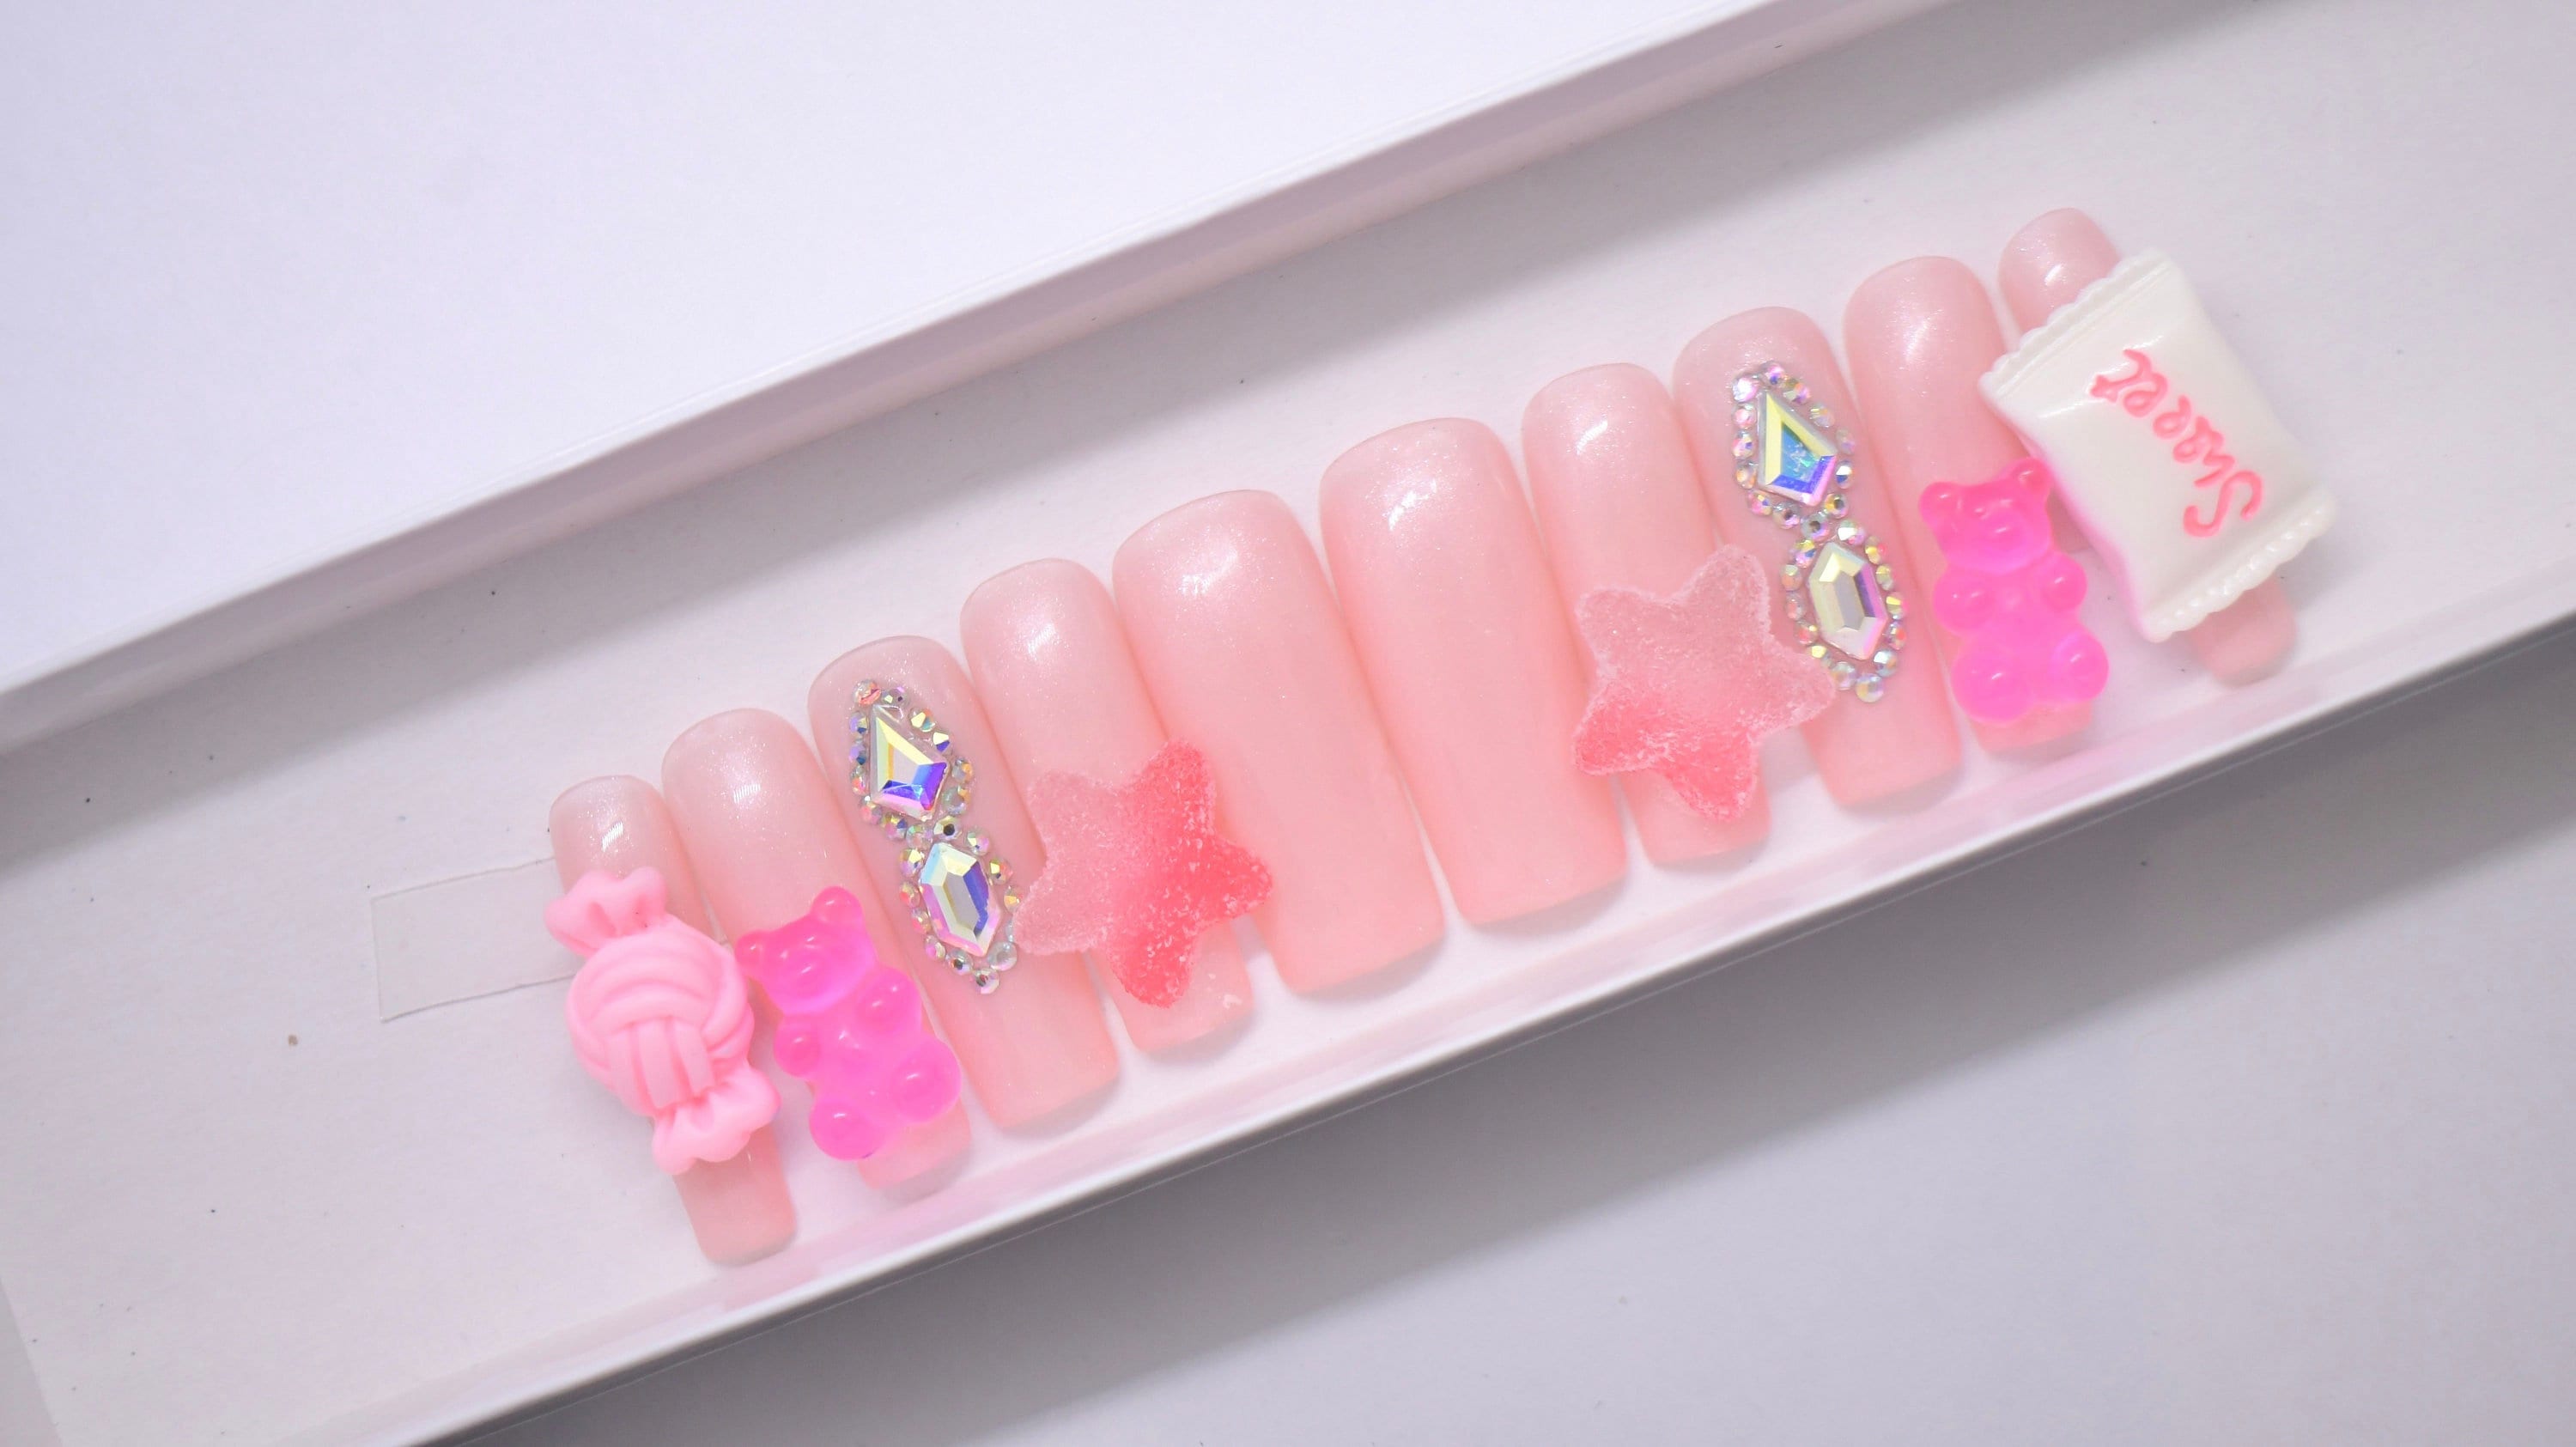 5pcs Tiny Lollipop Nail Art Charms RIYNAILS 